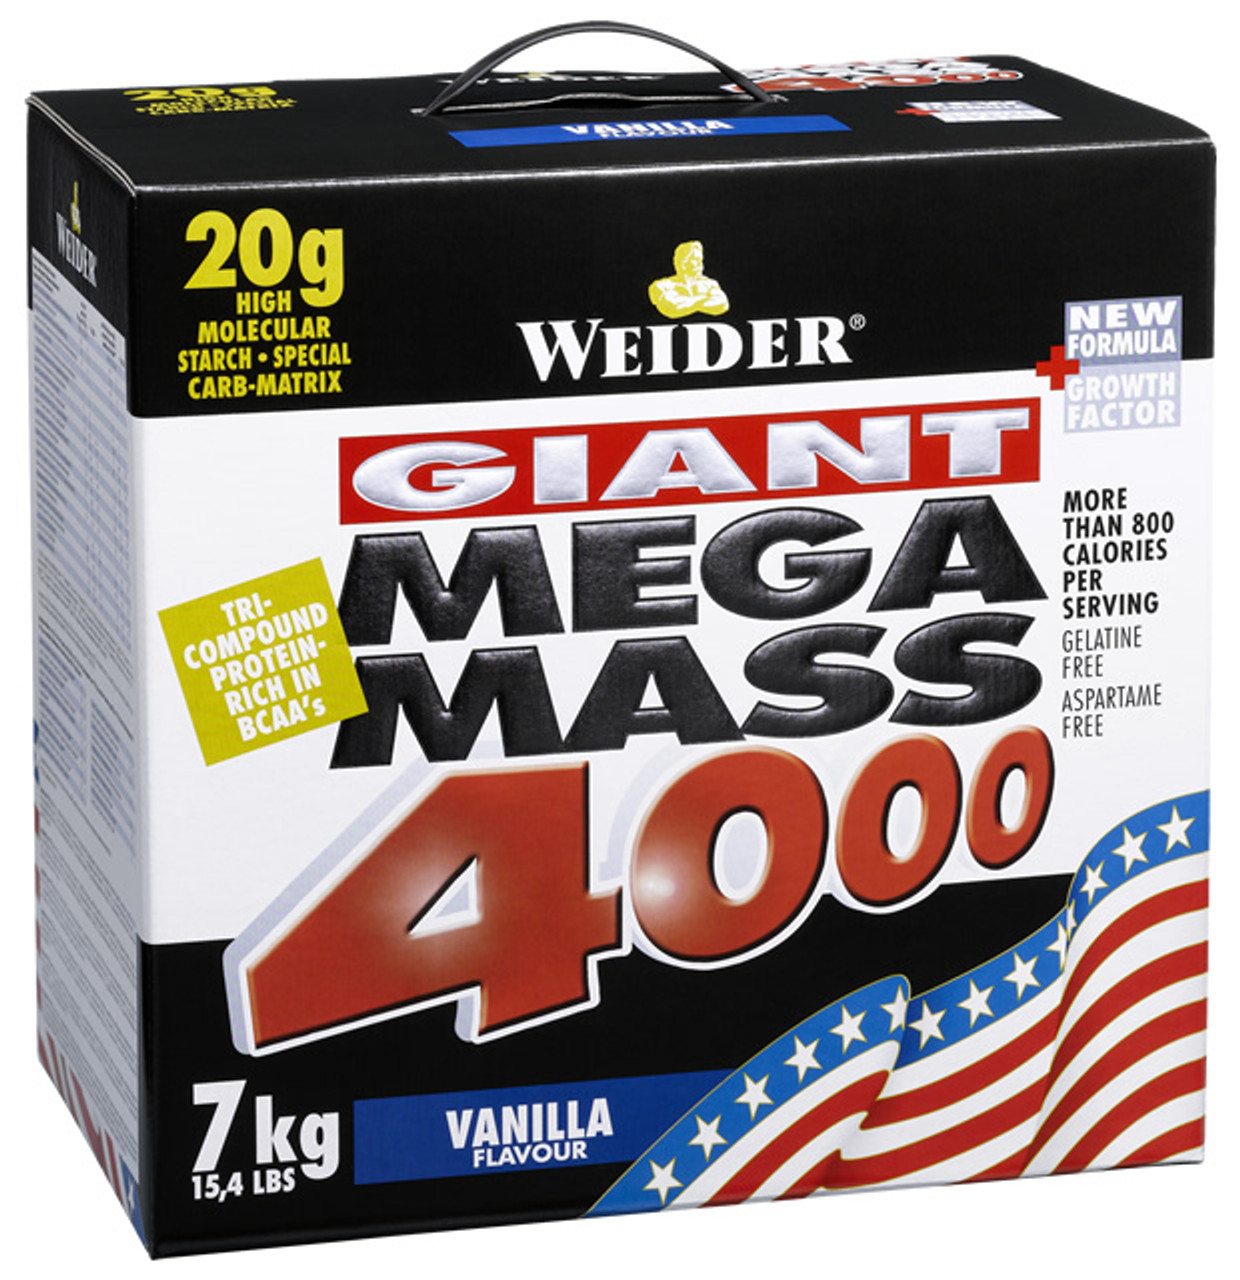 Weider Giant Mega Mass 4000 7 KG (15.4 LB) 